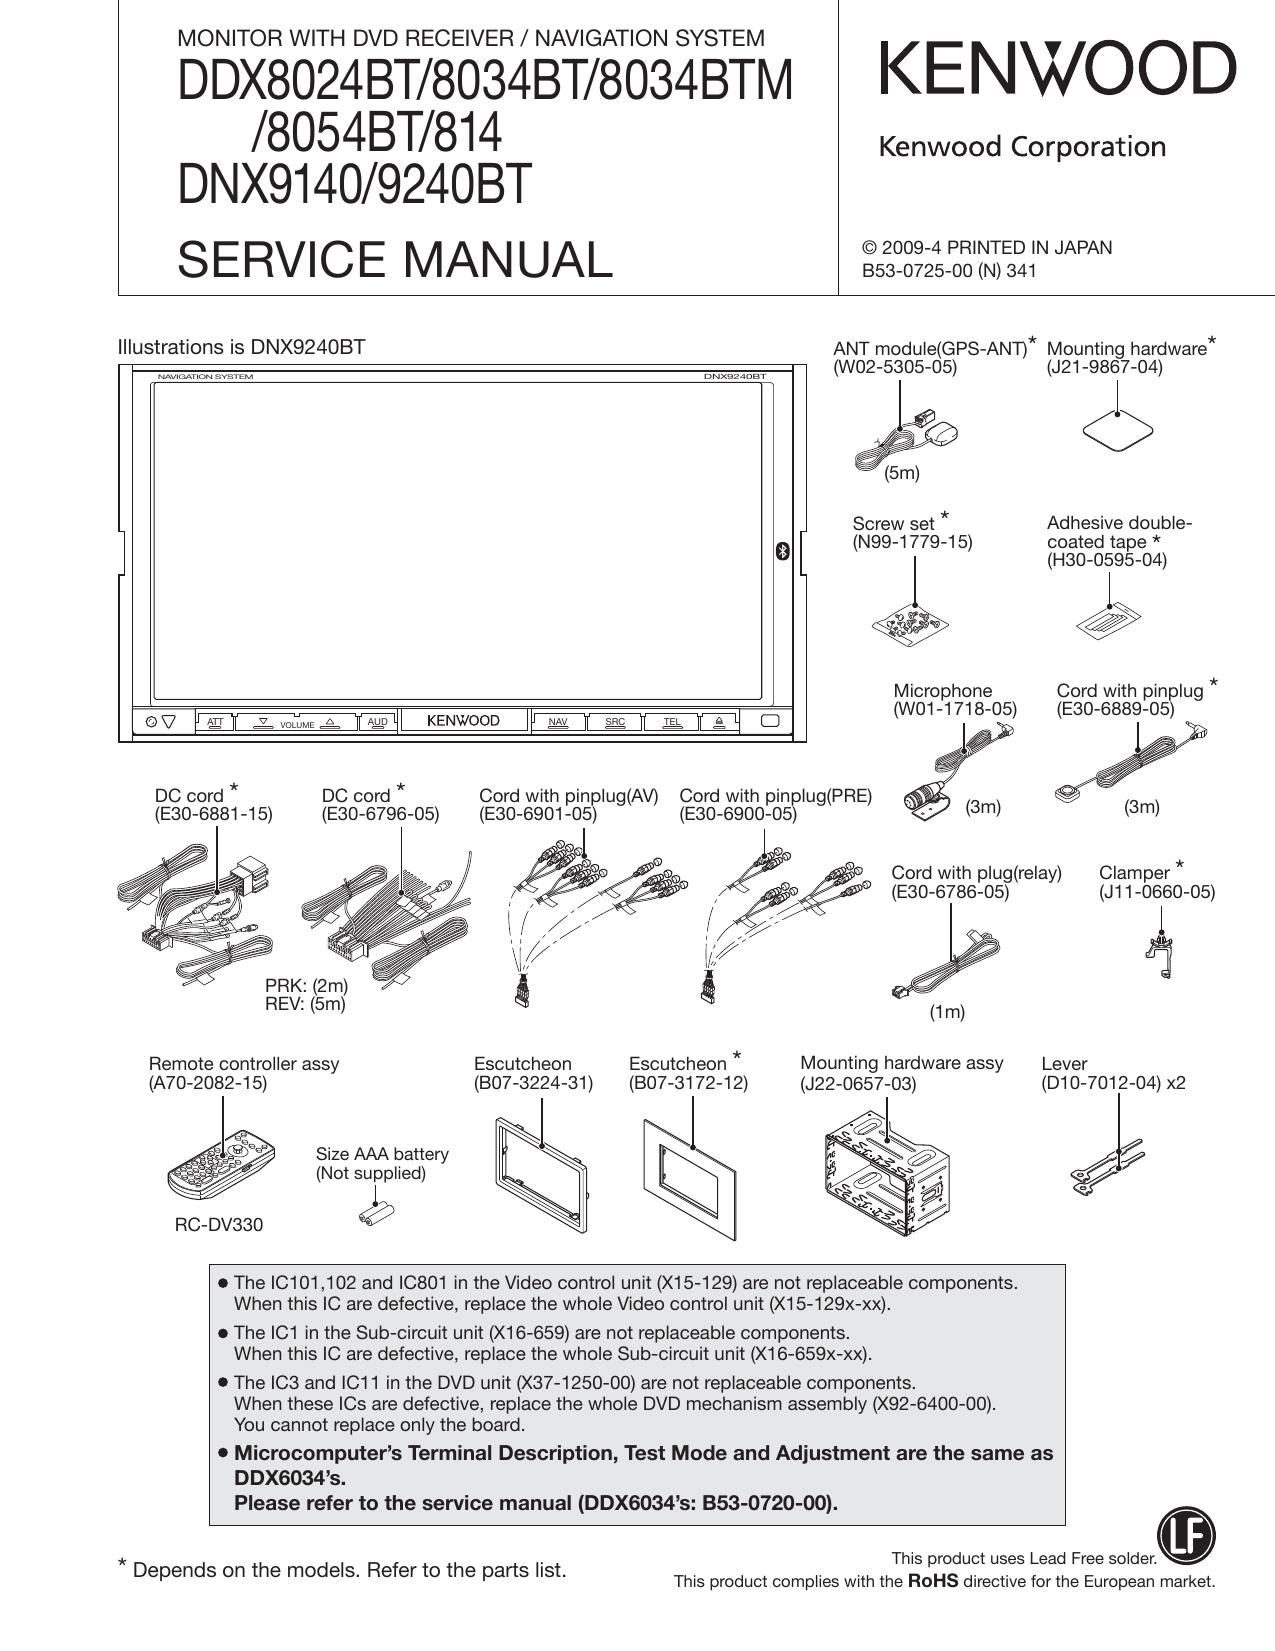 Kenwood DDX 814 HU Service Manual